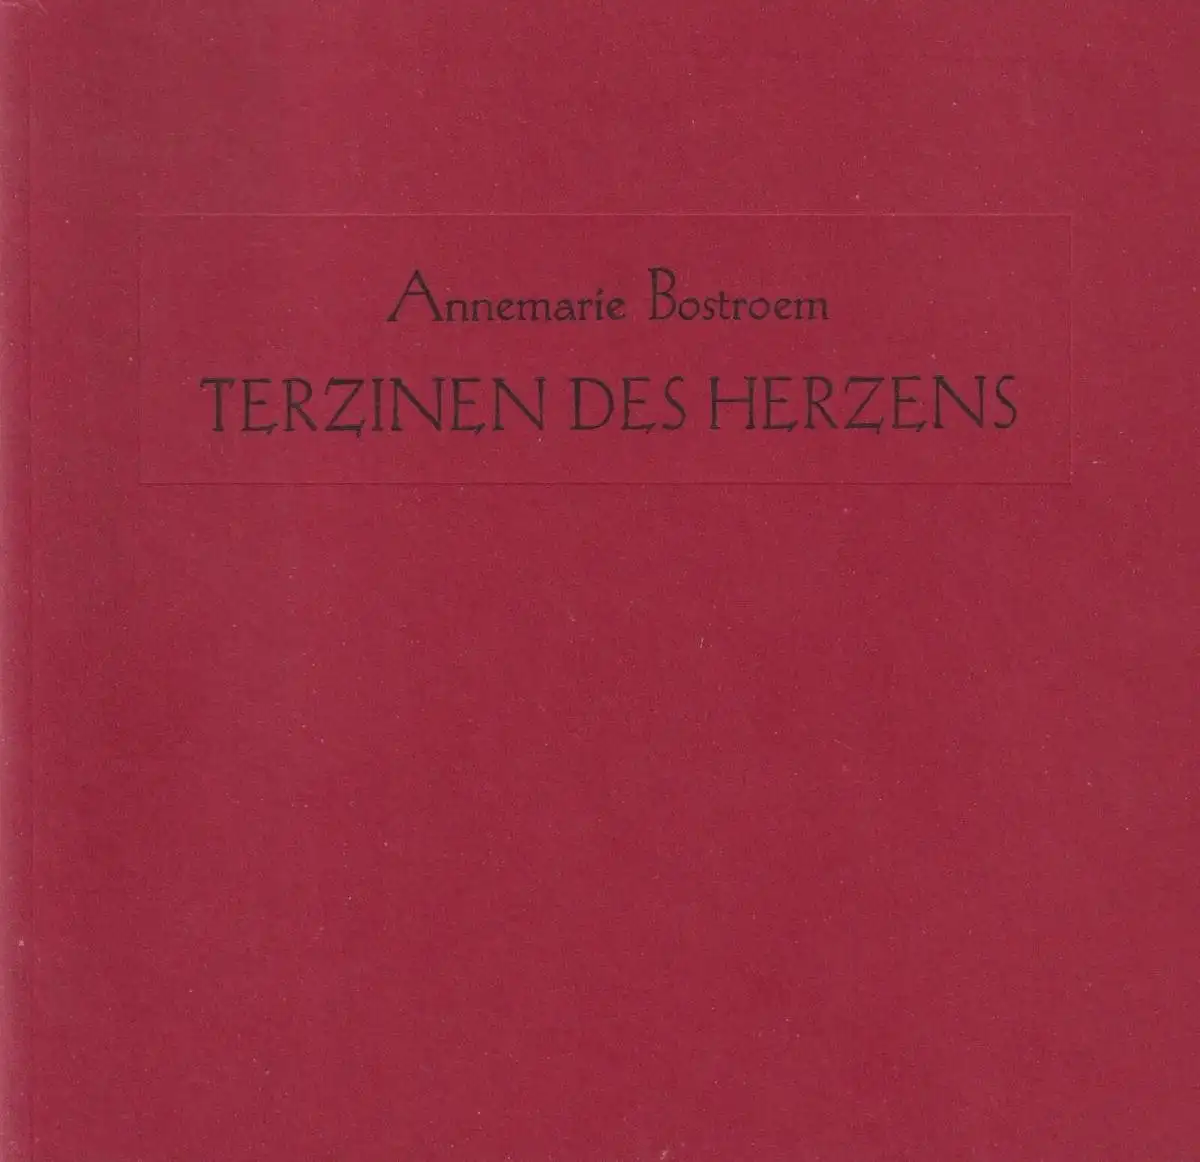 Buch: Terzinen des Herzens, Bostroem, Annemarie, 1999, AckerPresse